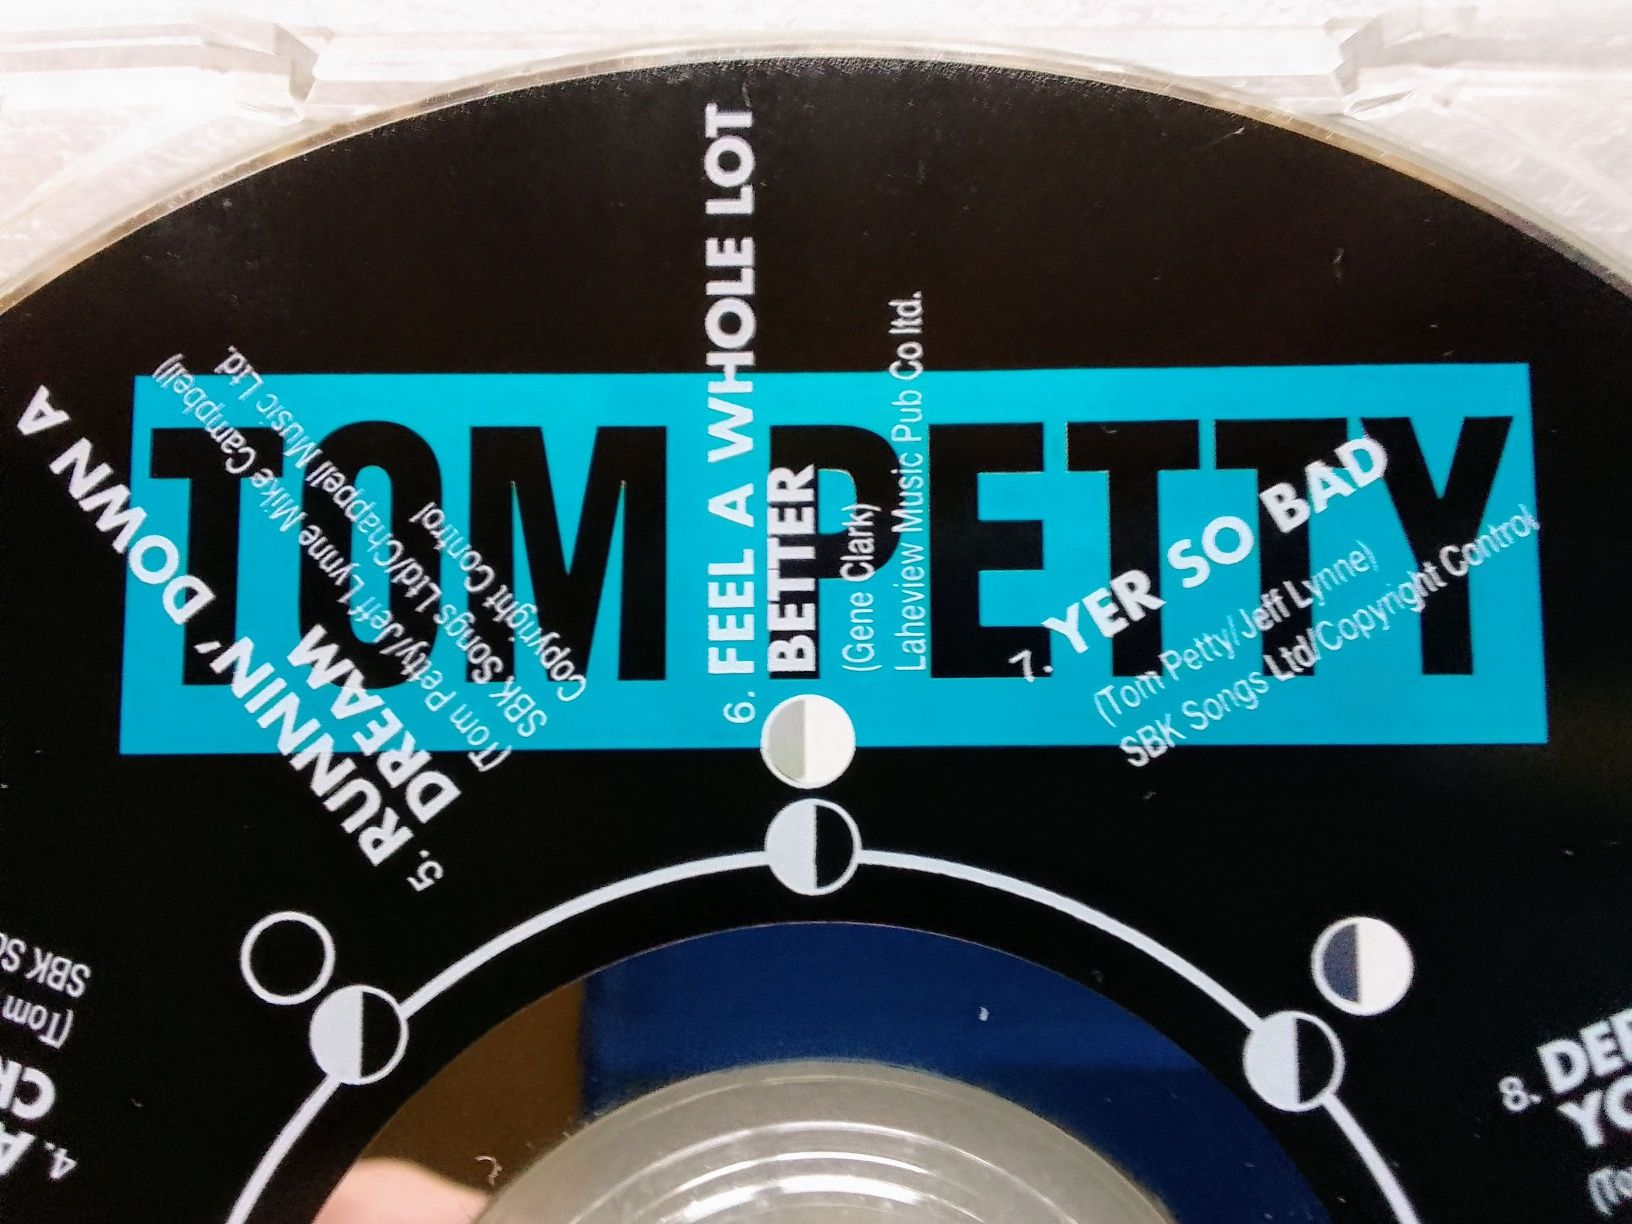 TOM PETTY "Full moon". CD Audio.